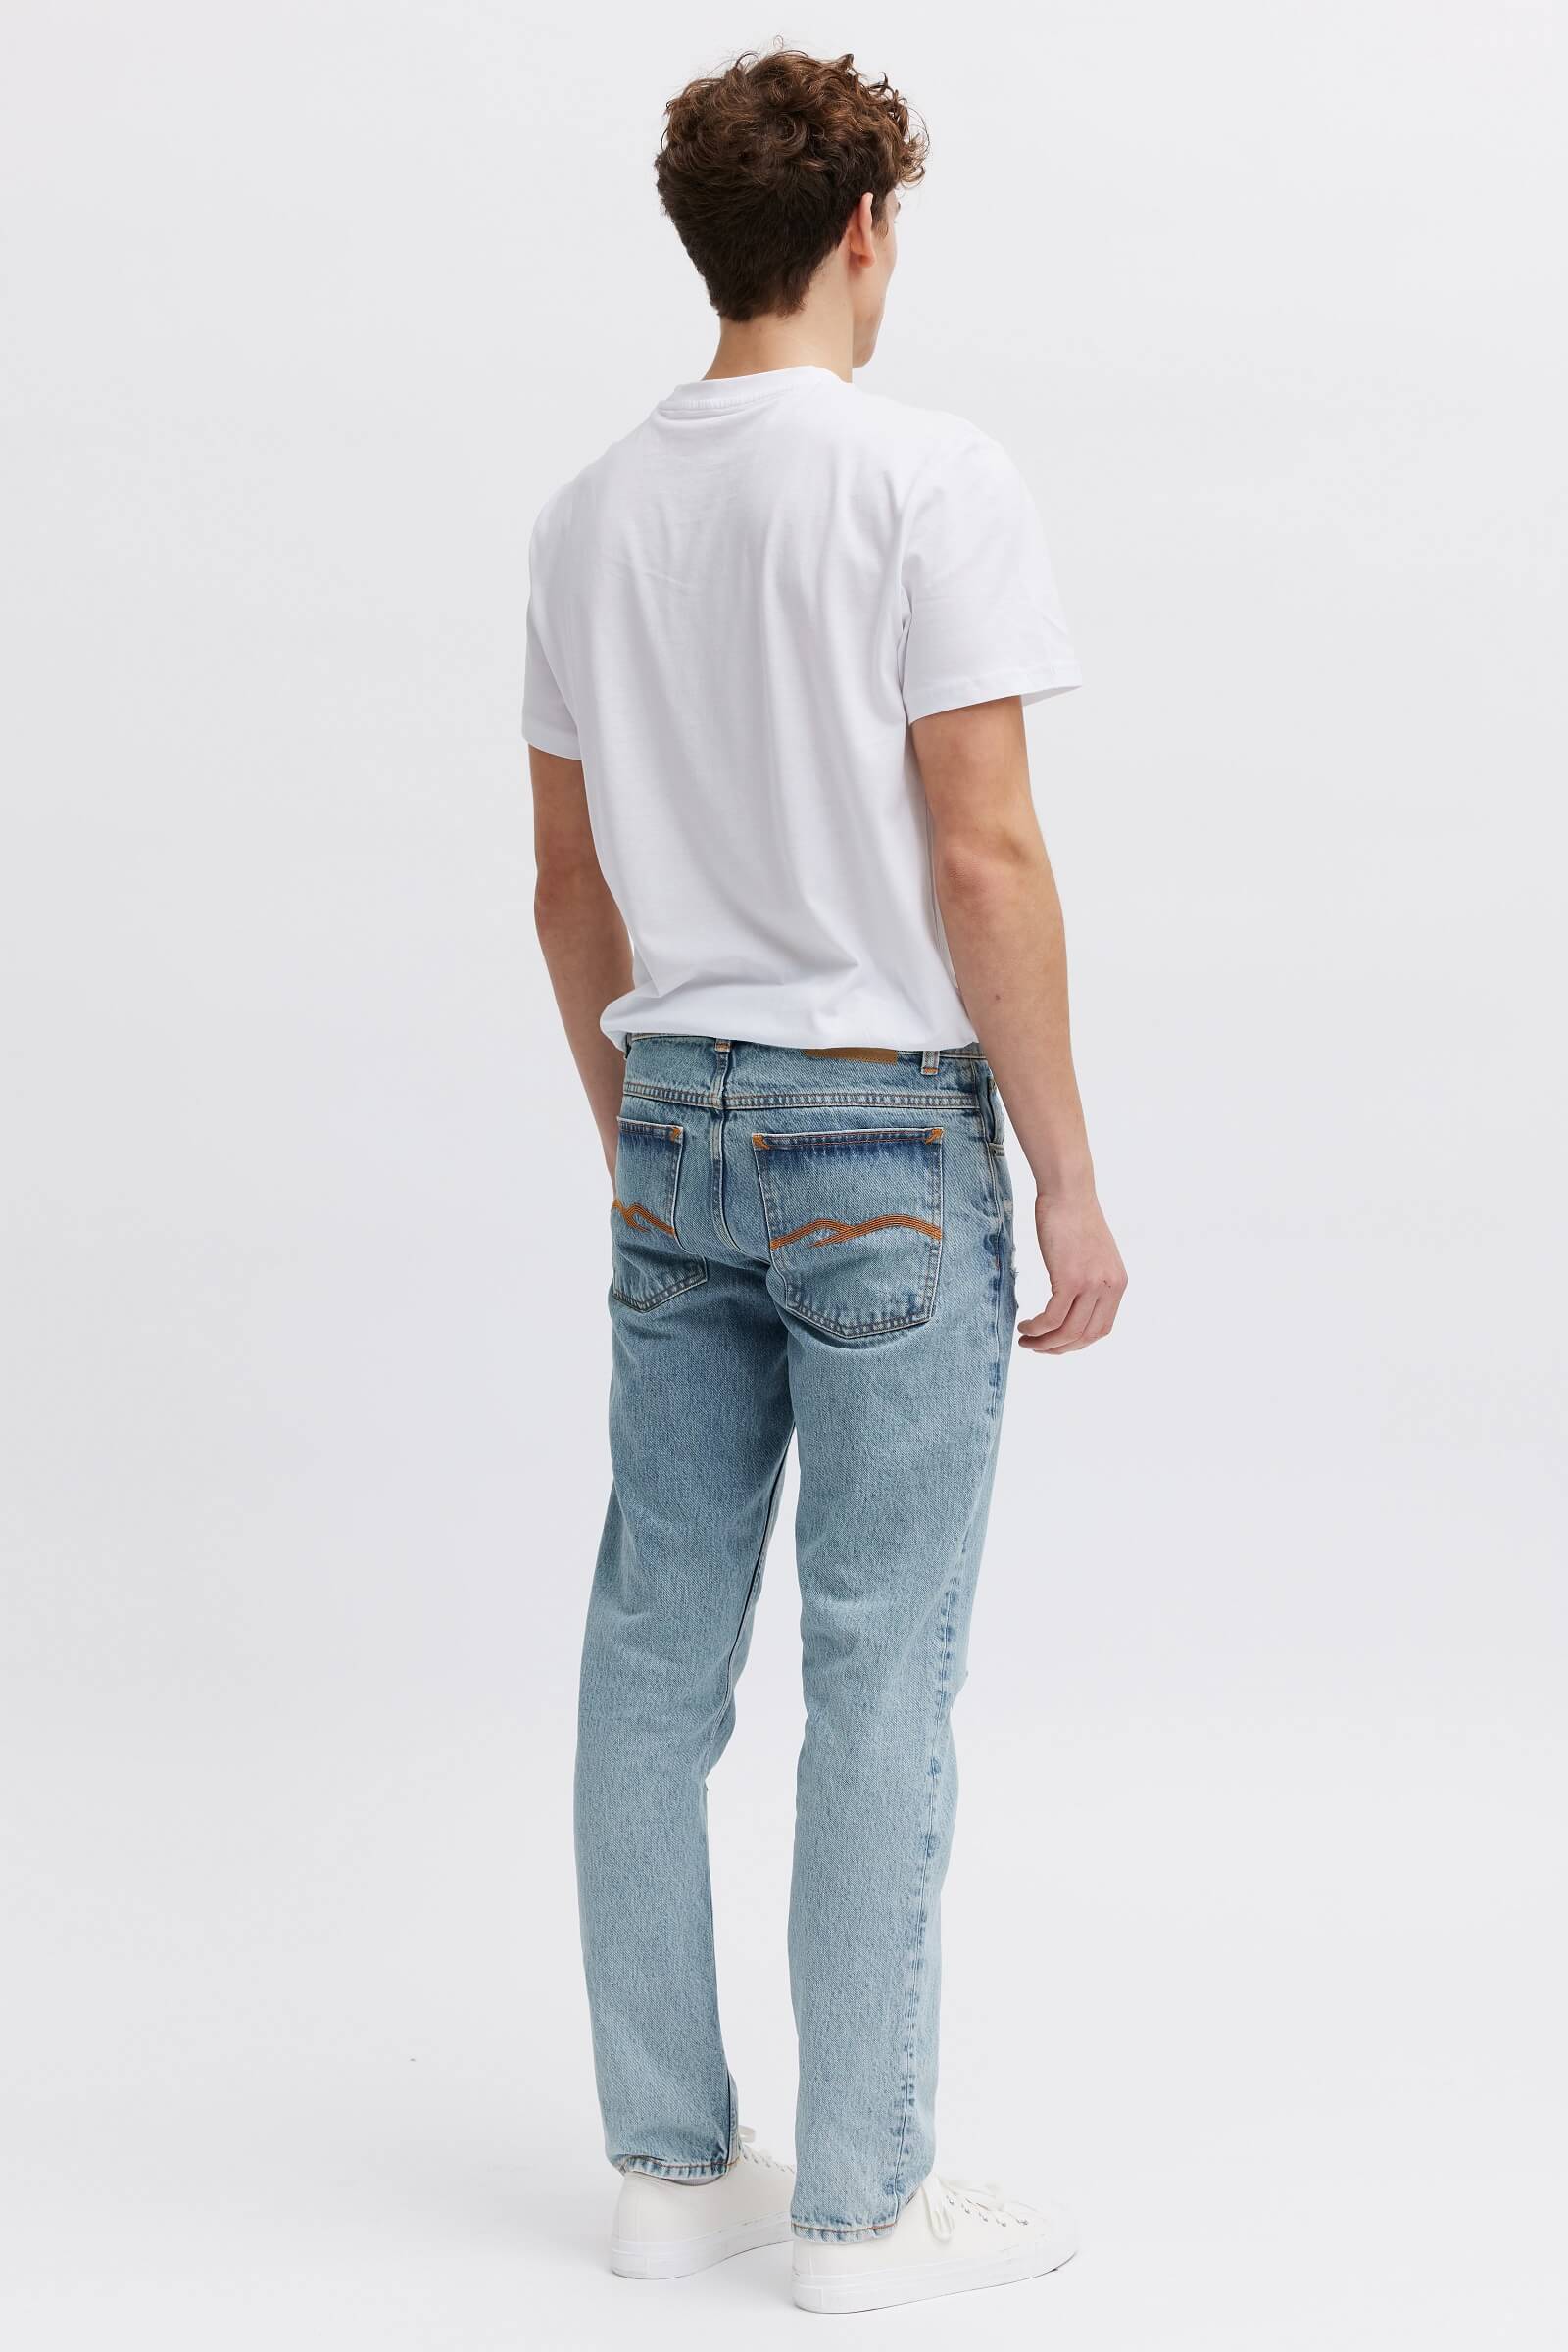 ethical denim jeans 